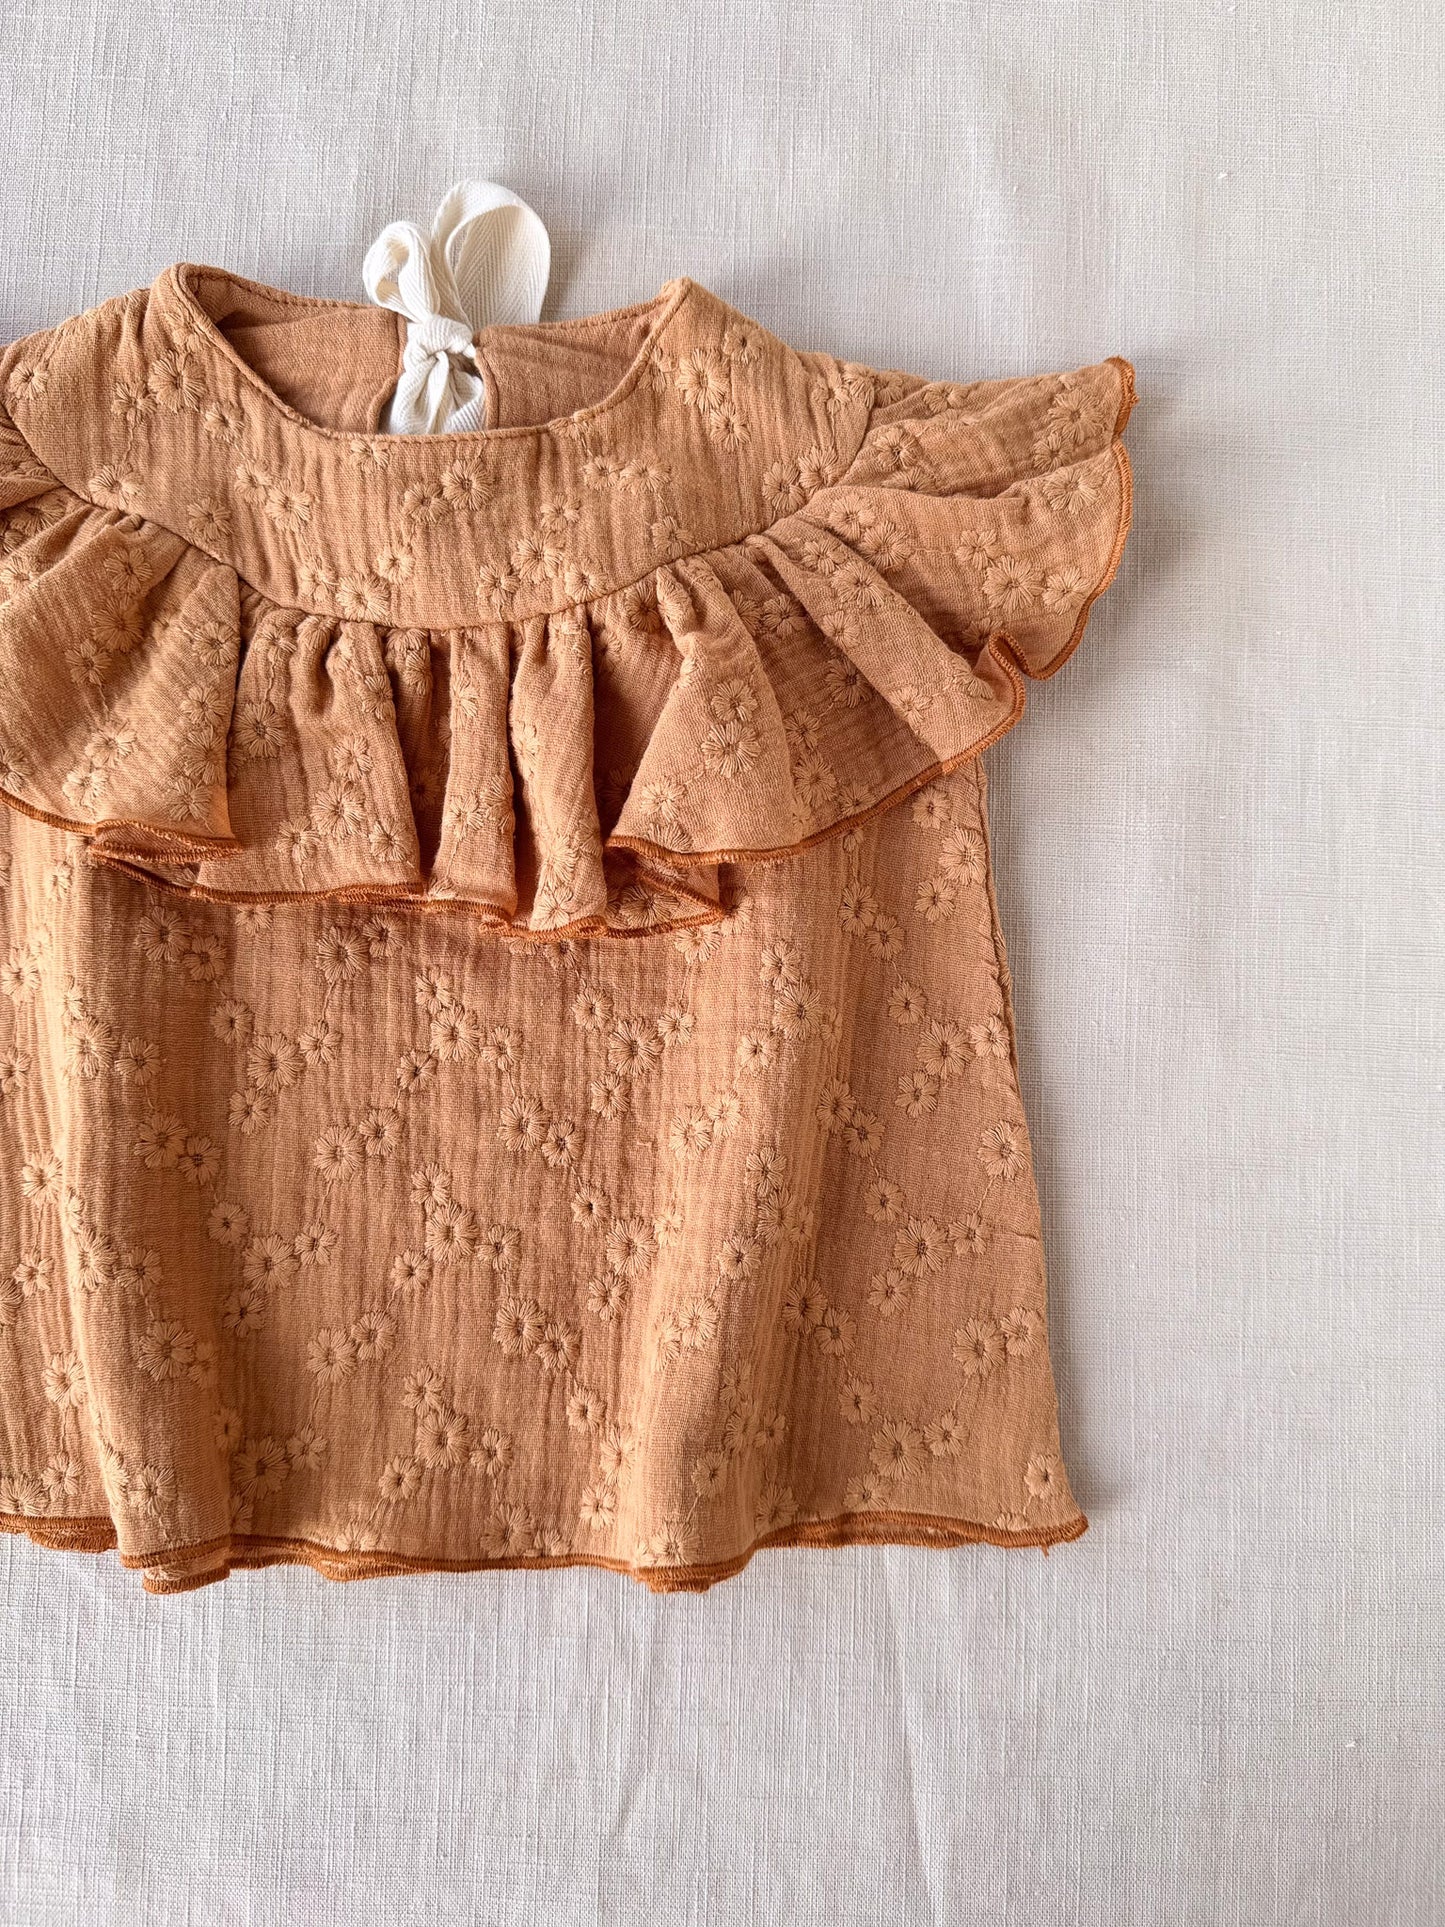 Naya baby dress / embroidered caramel